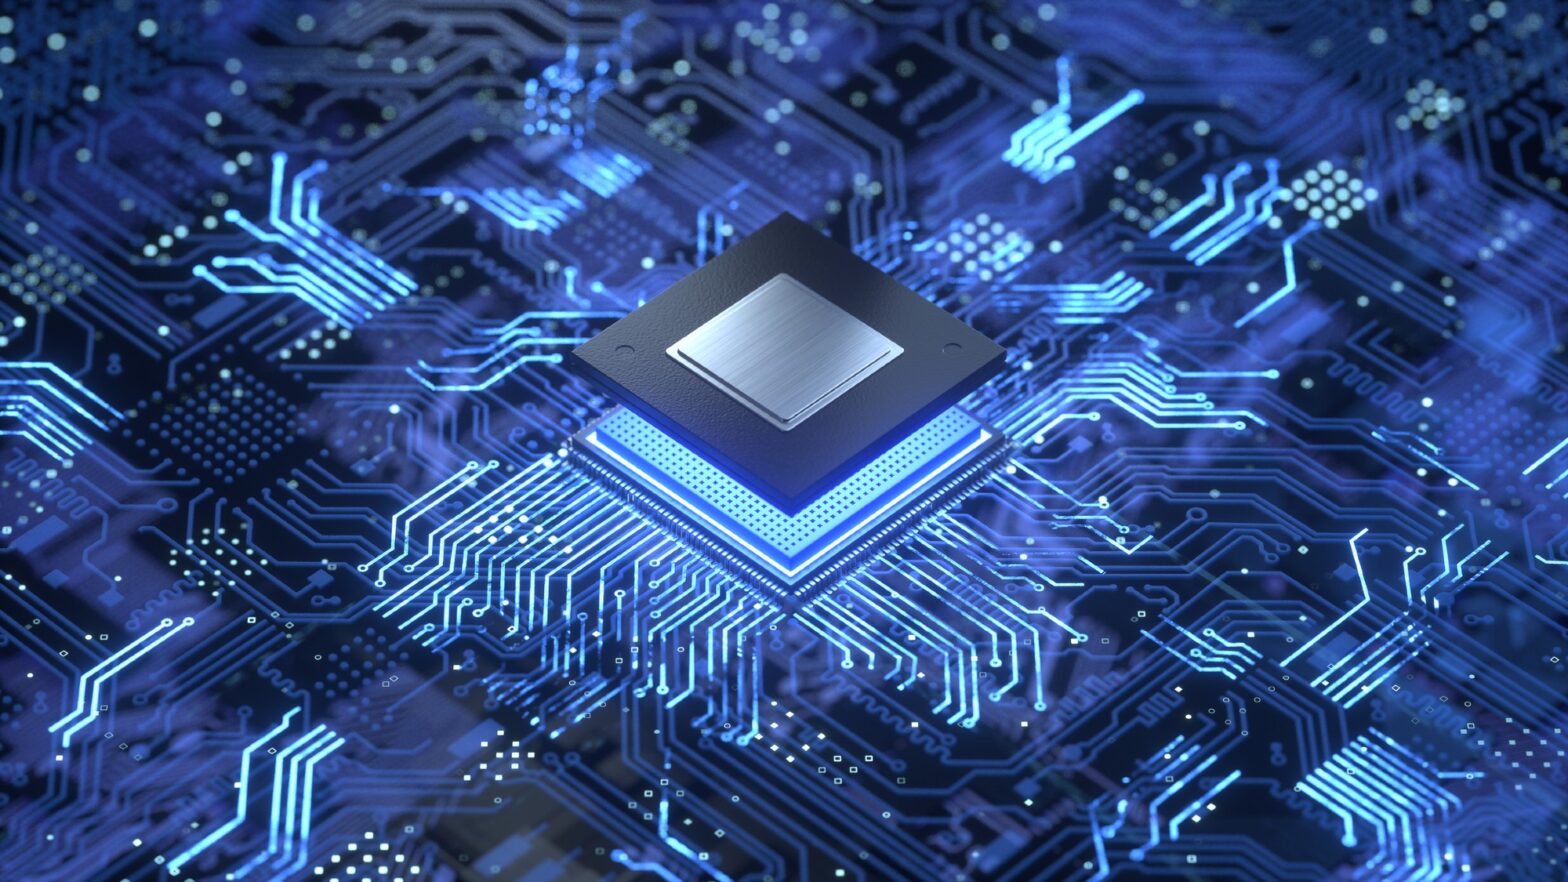 Semiconductor Capital Equipment Market